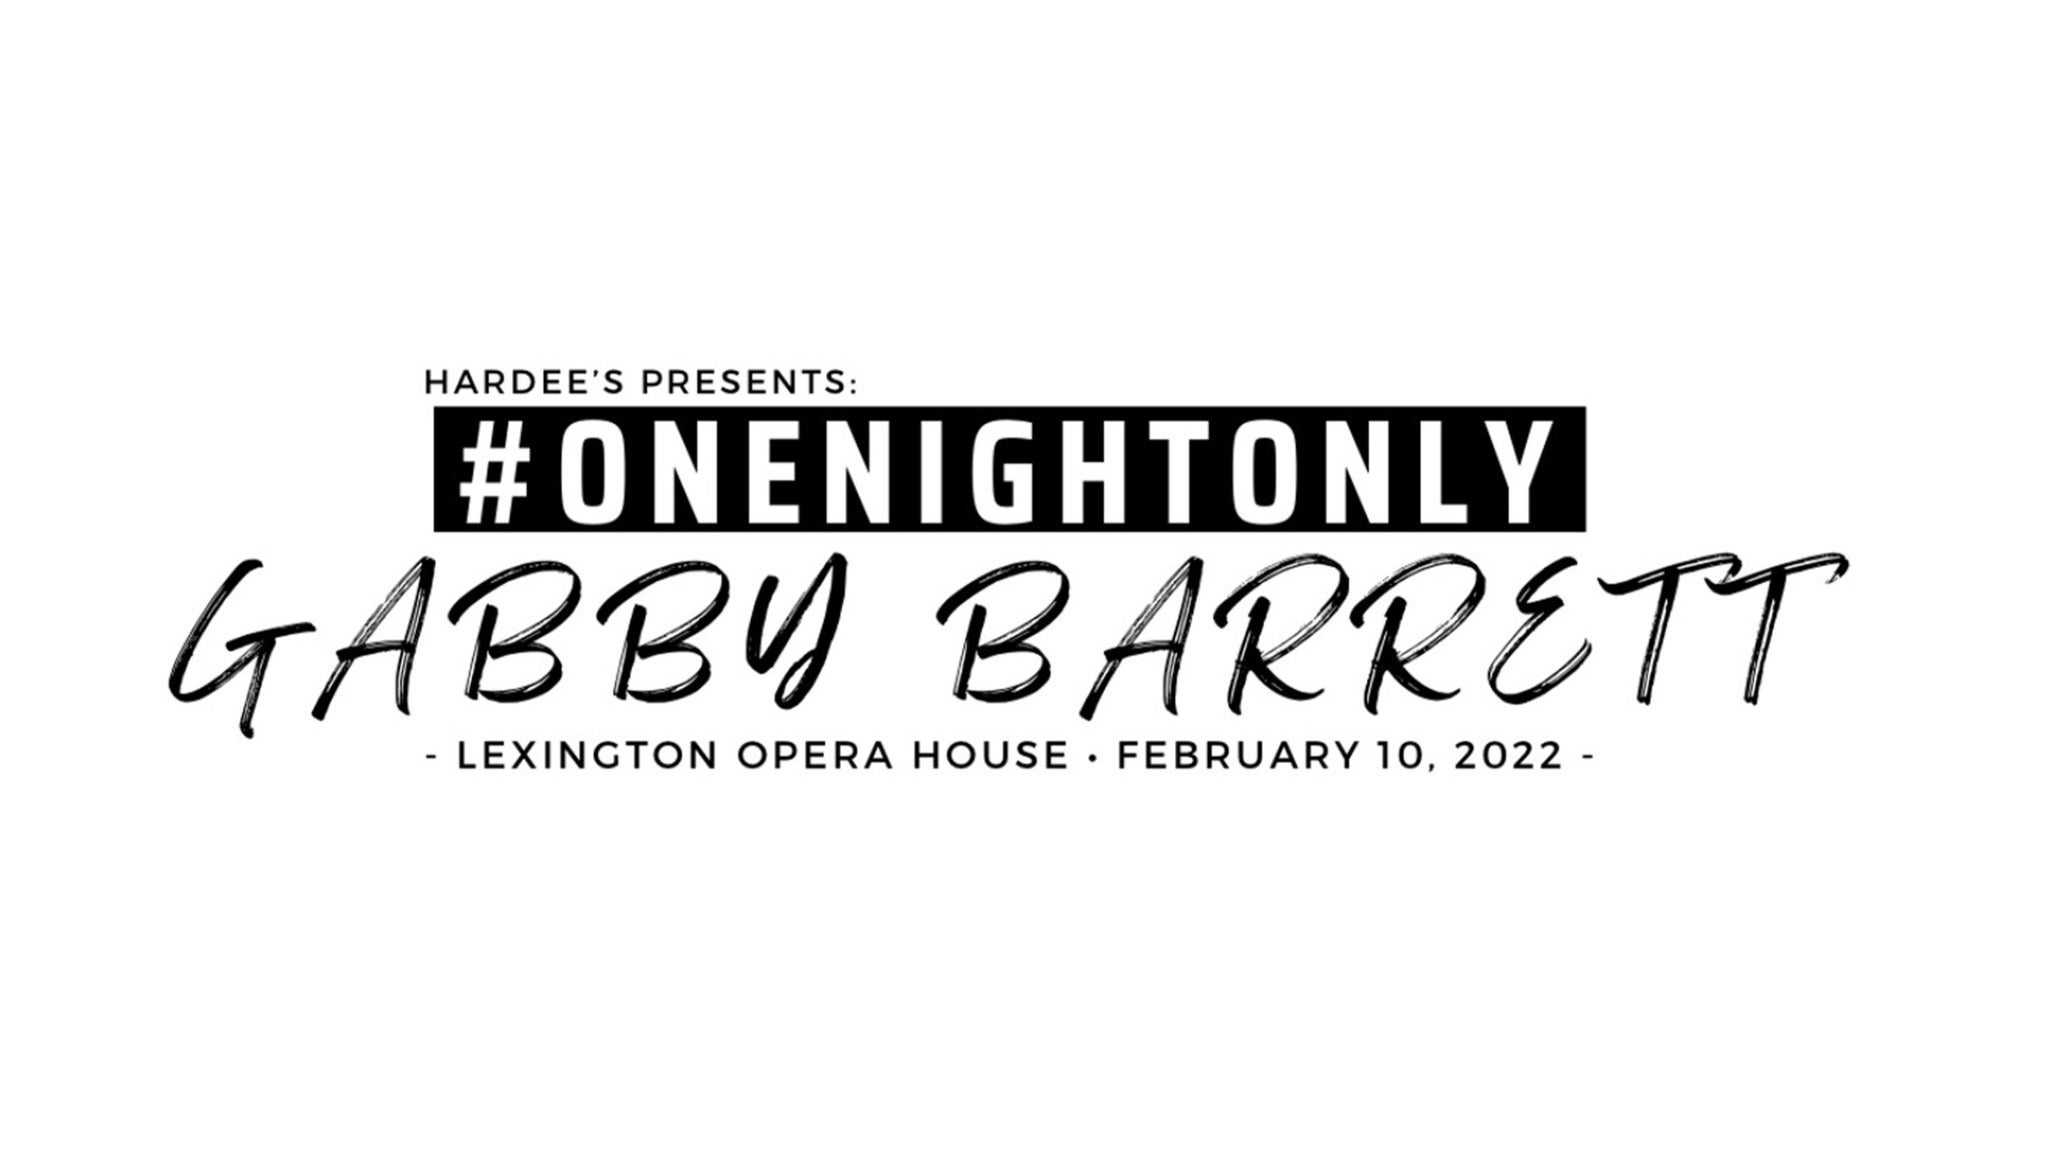 #ONENIGHTONLY: Gabby Barrett presale code for show tickets in Lexington, KY (Lexington Opera House)